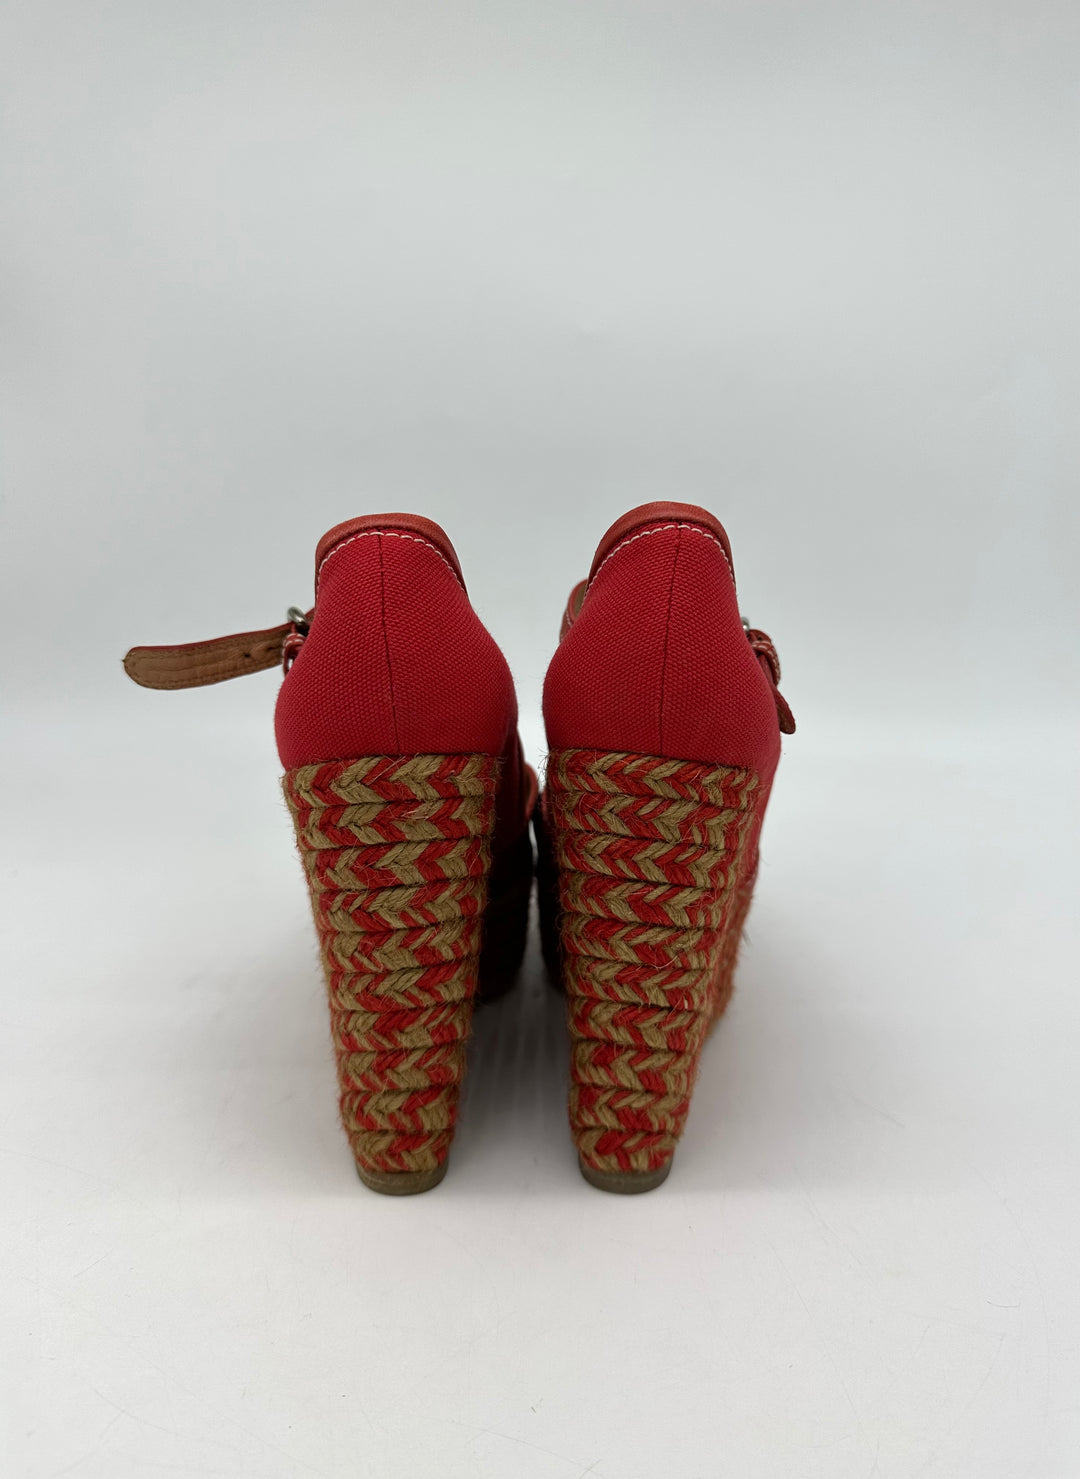 SERGIO ROSSI Red Heels for Women